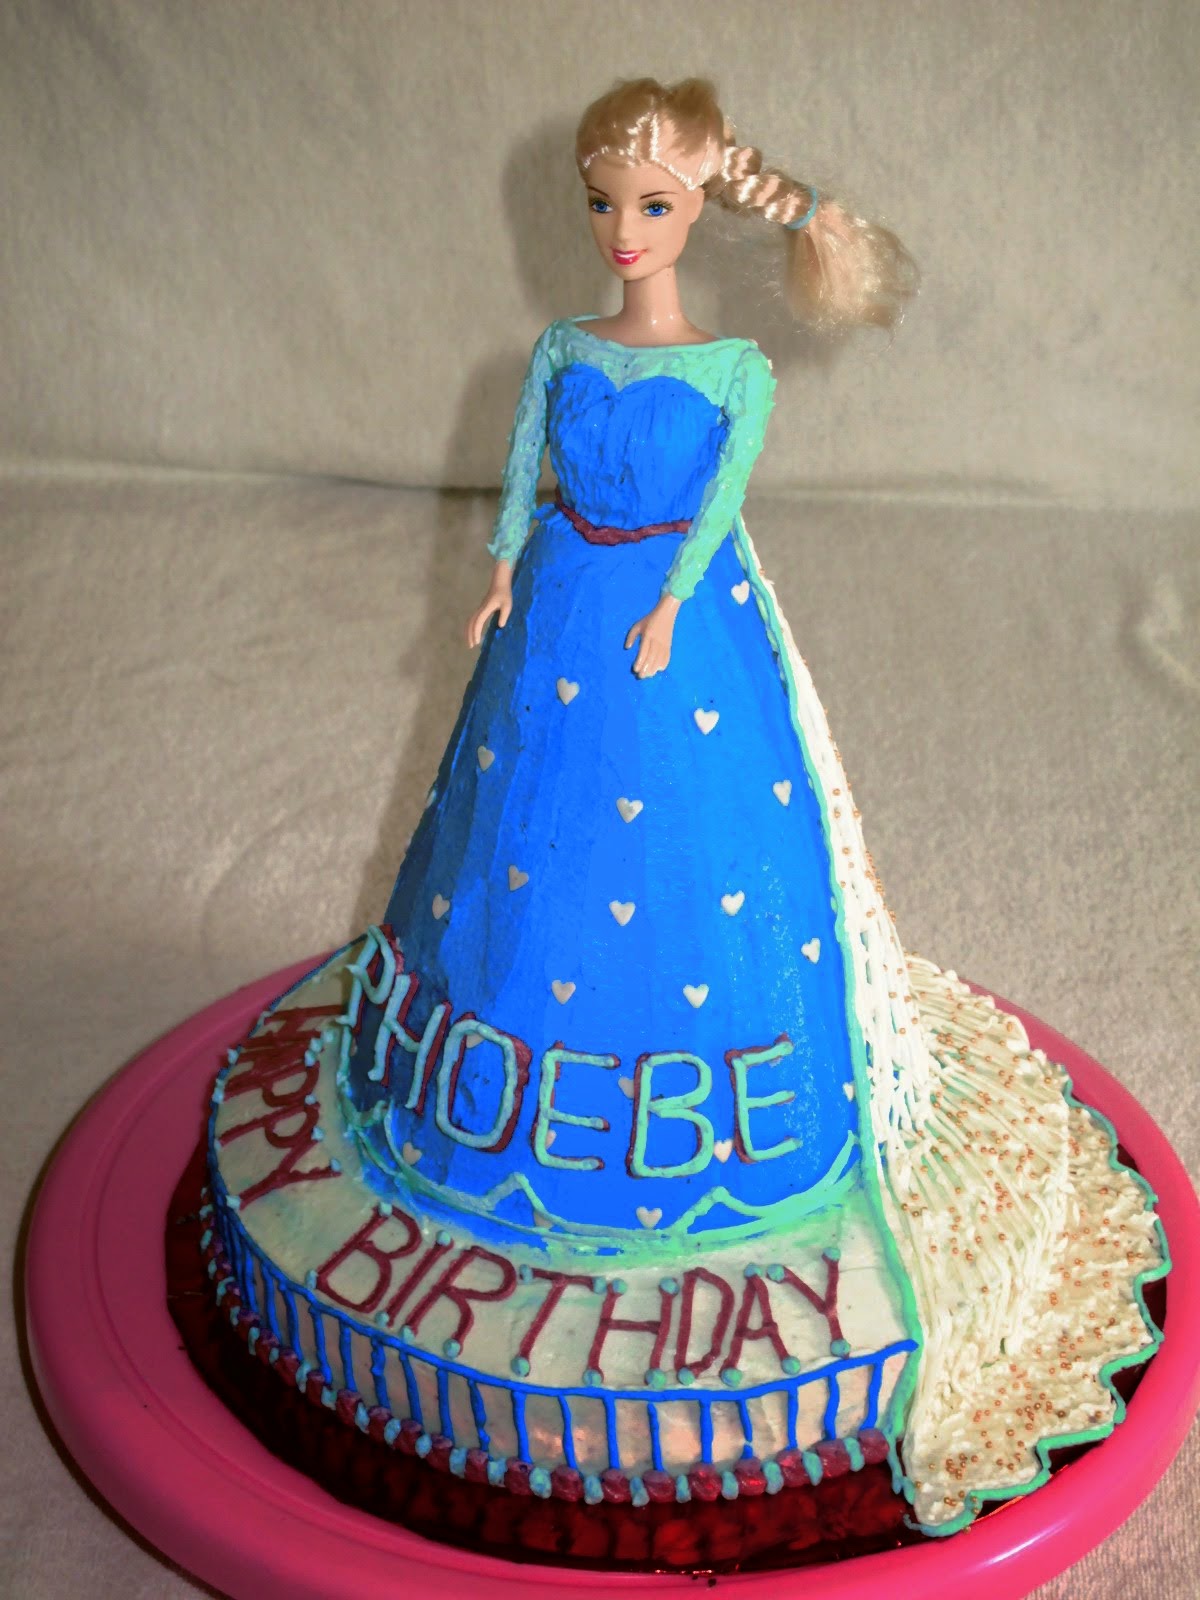 My favorite cake